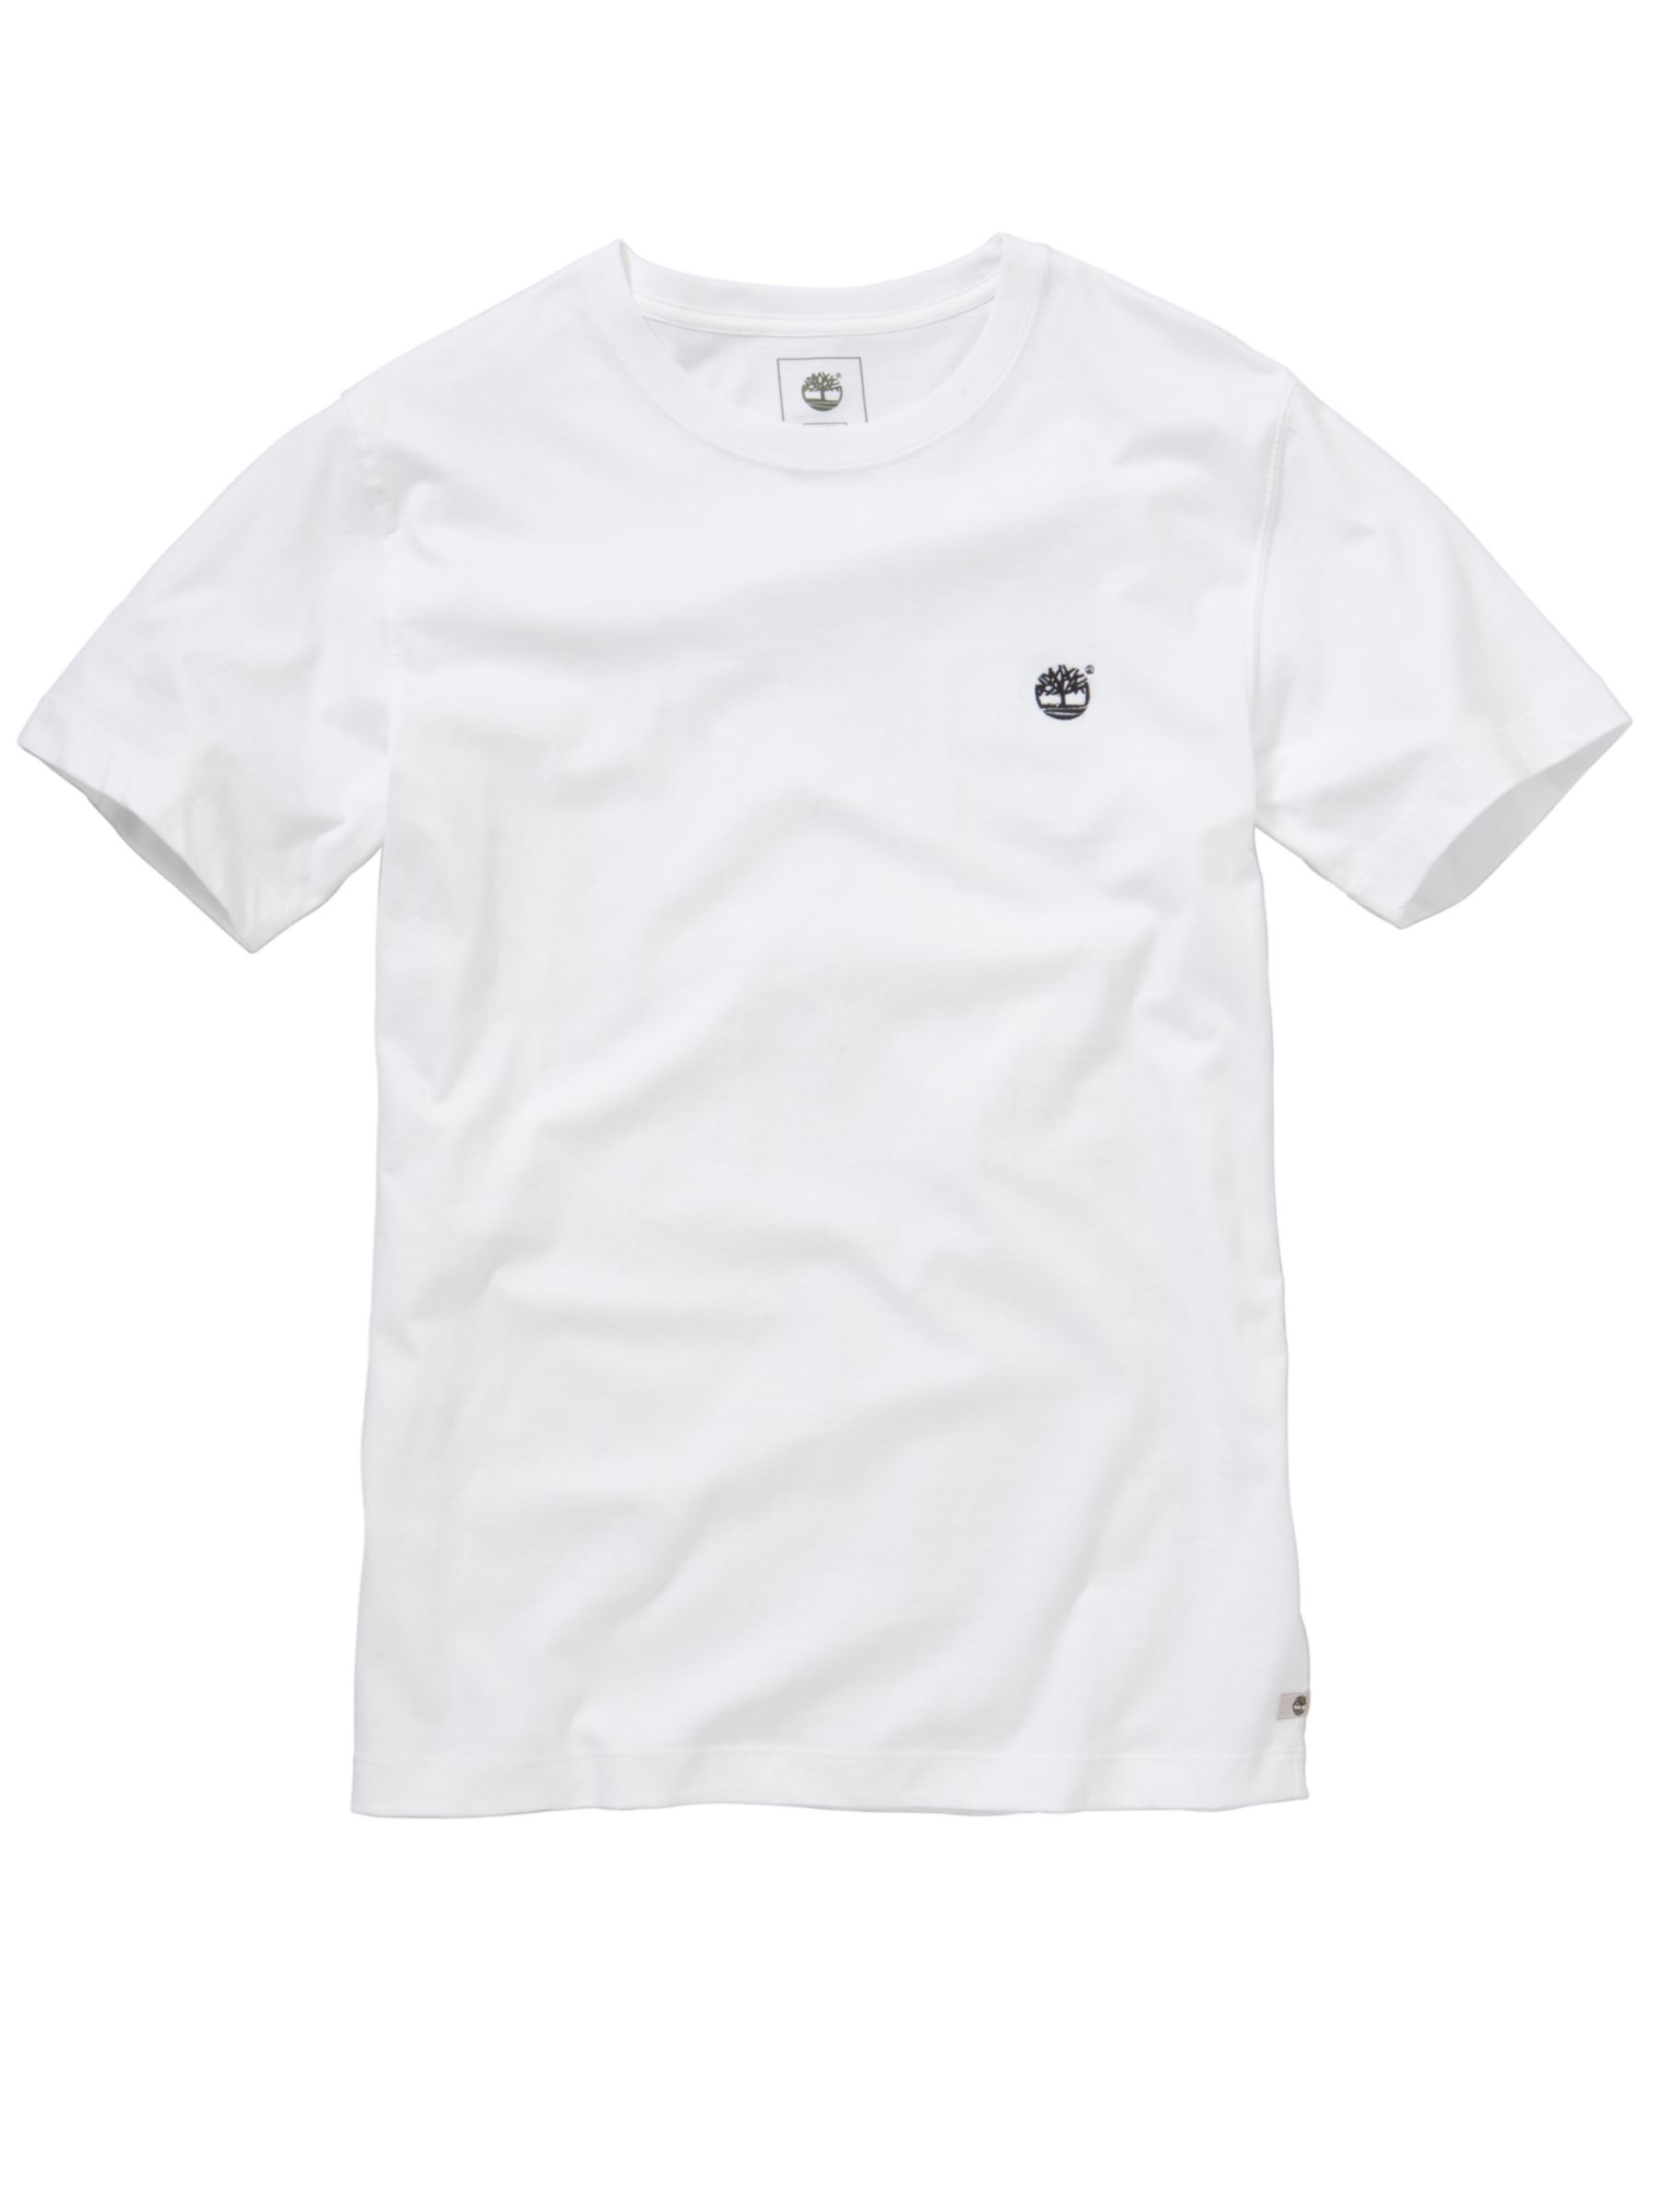 Timberland Block Colour Logo T-Shirt, White